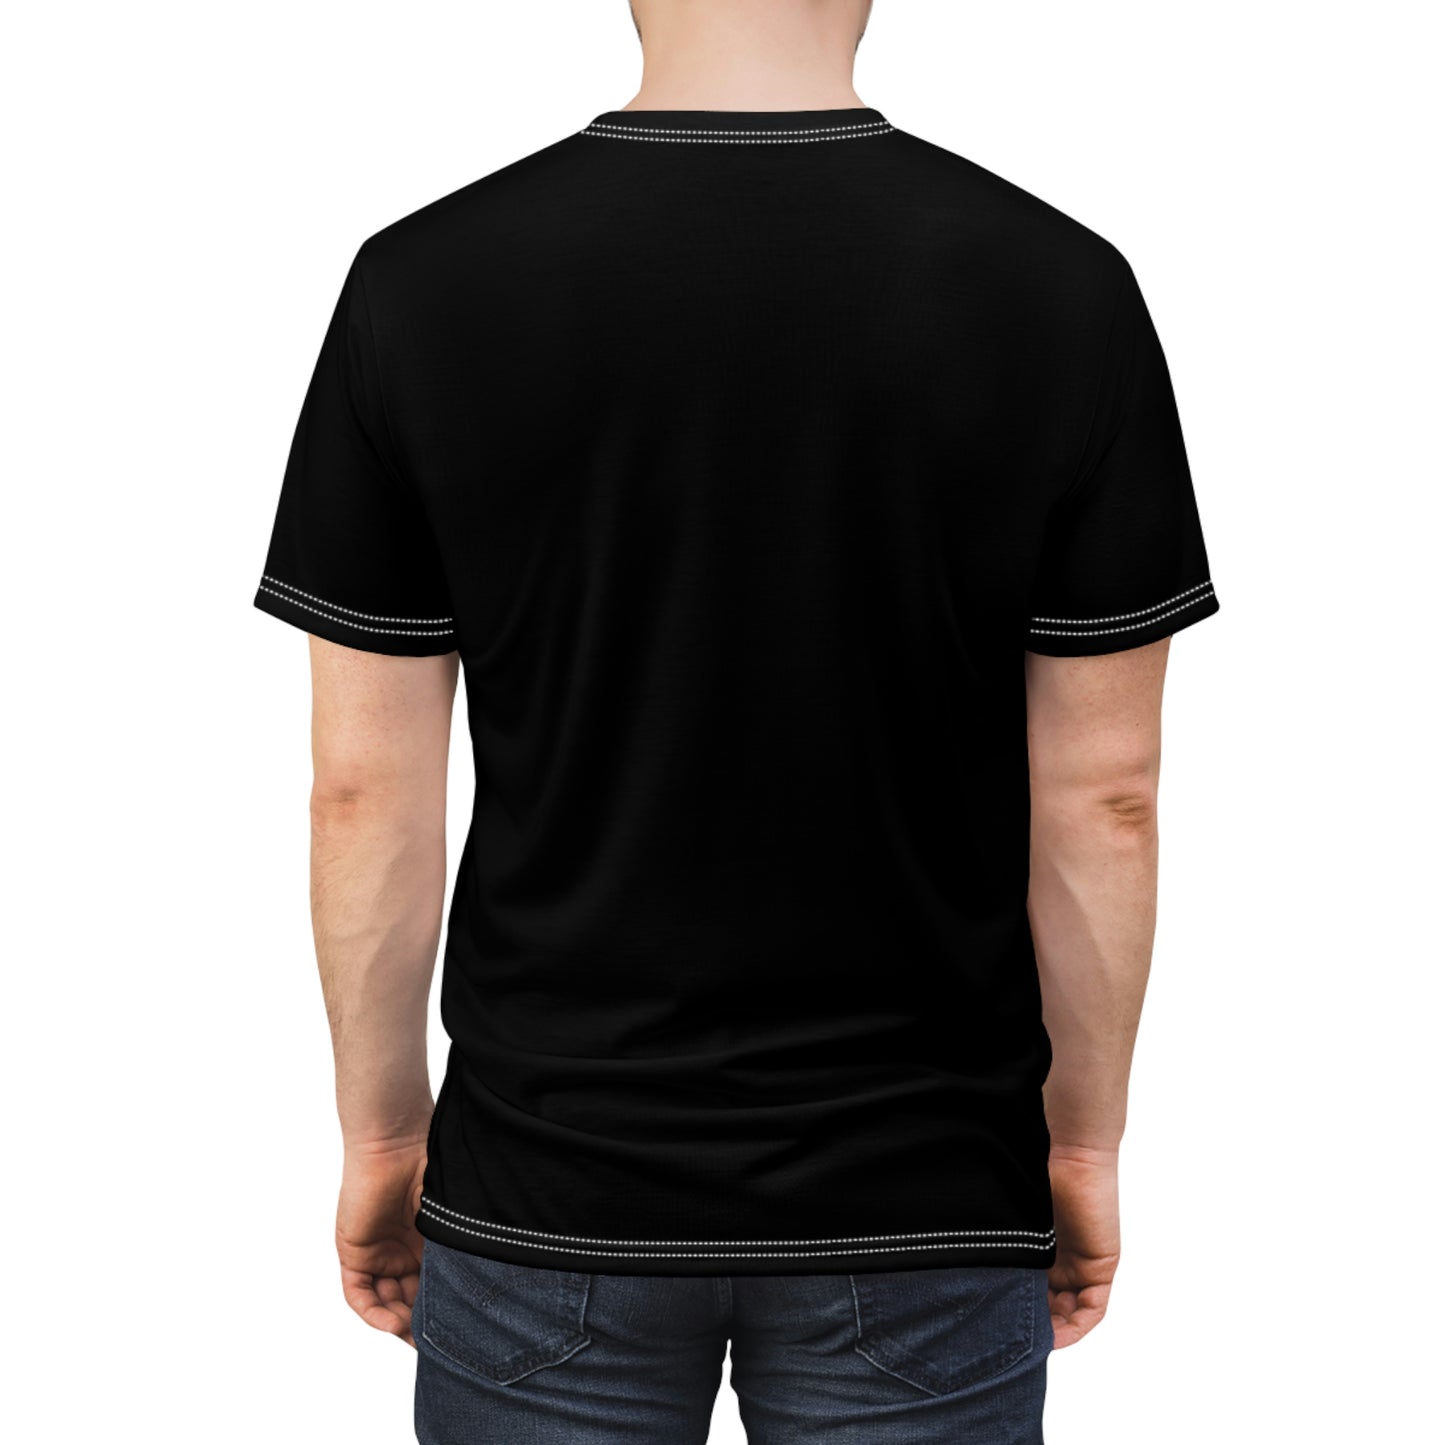 Feral! - Unisex All-Over Print Cut & Sew T-Shirt